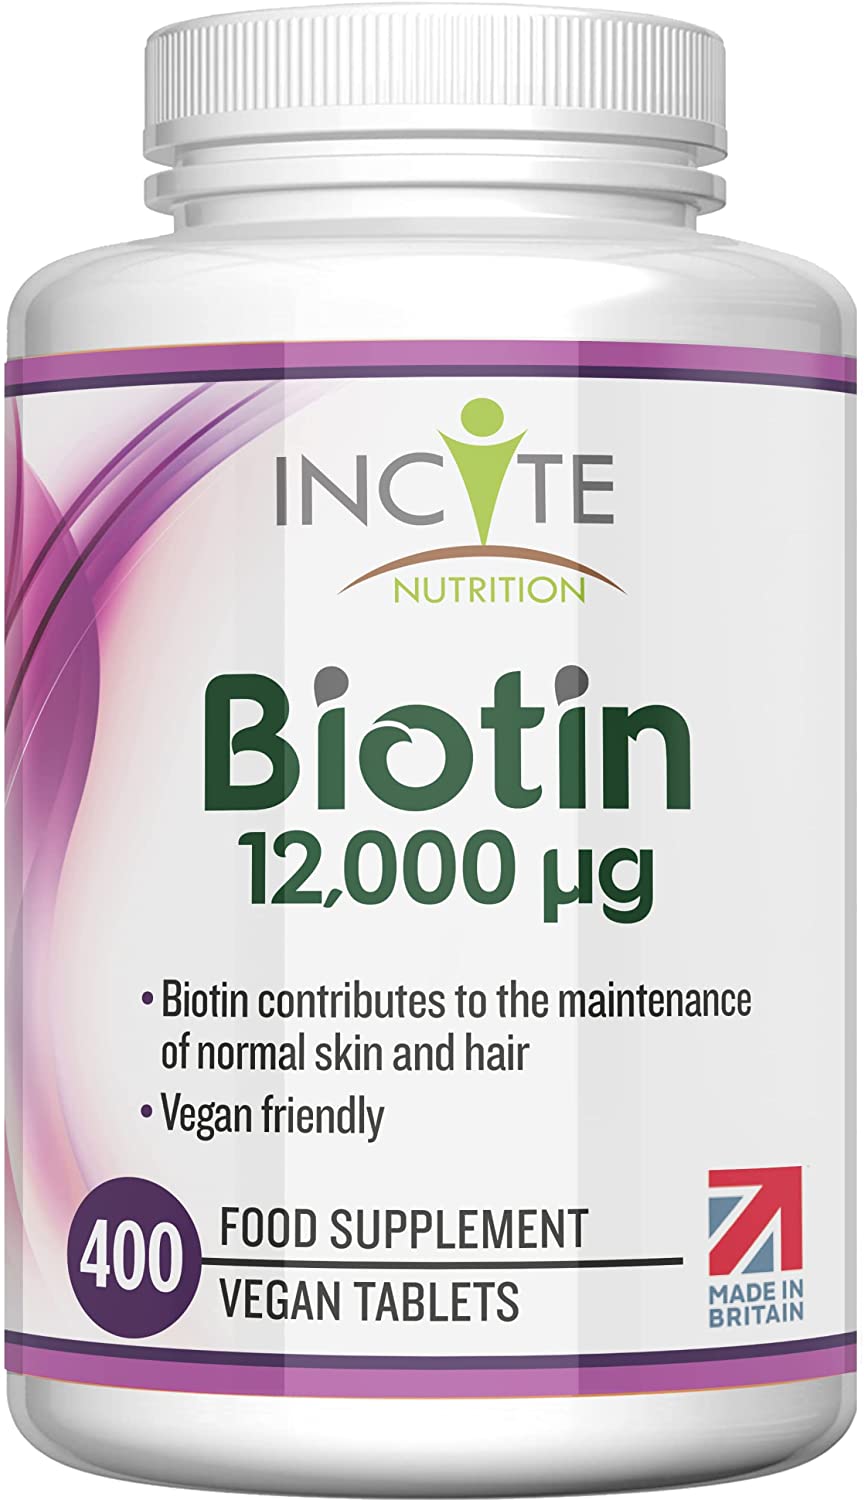 Nature's Potent - Biotin 10,000 mcg for Hair Growth